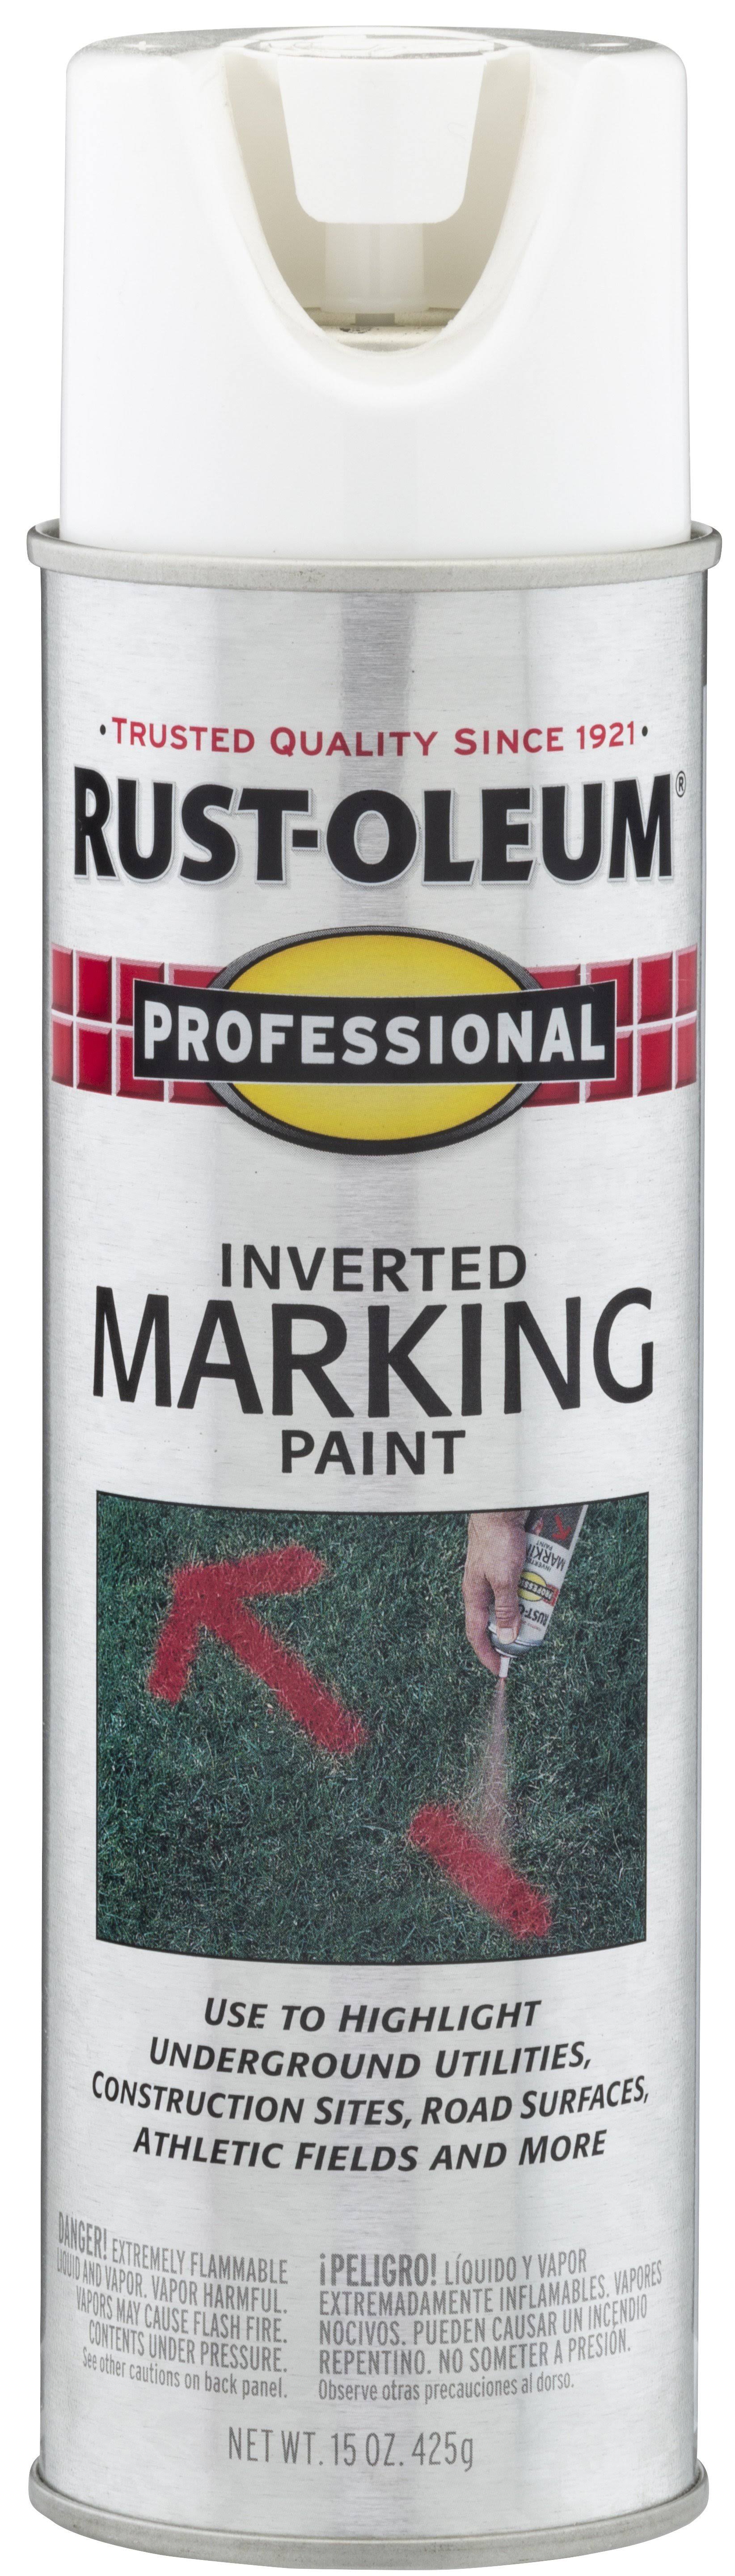 Rust-Oleum Professional Inverted Marking Spray Paint - White, 15oz